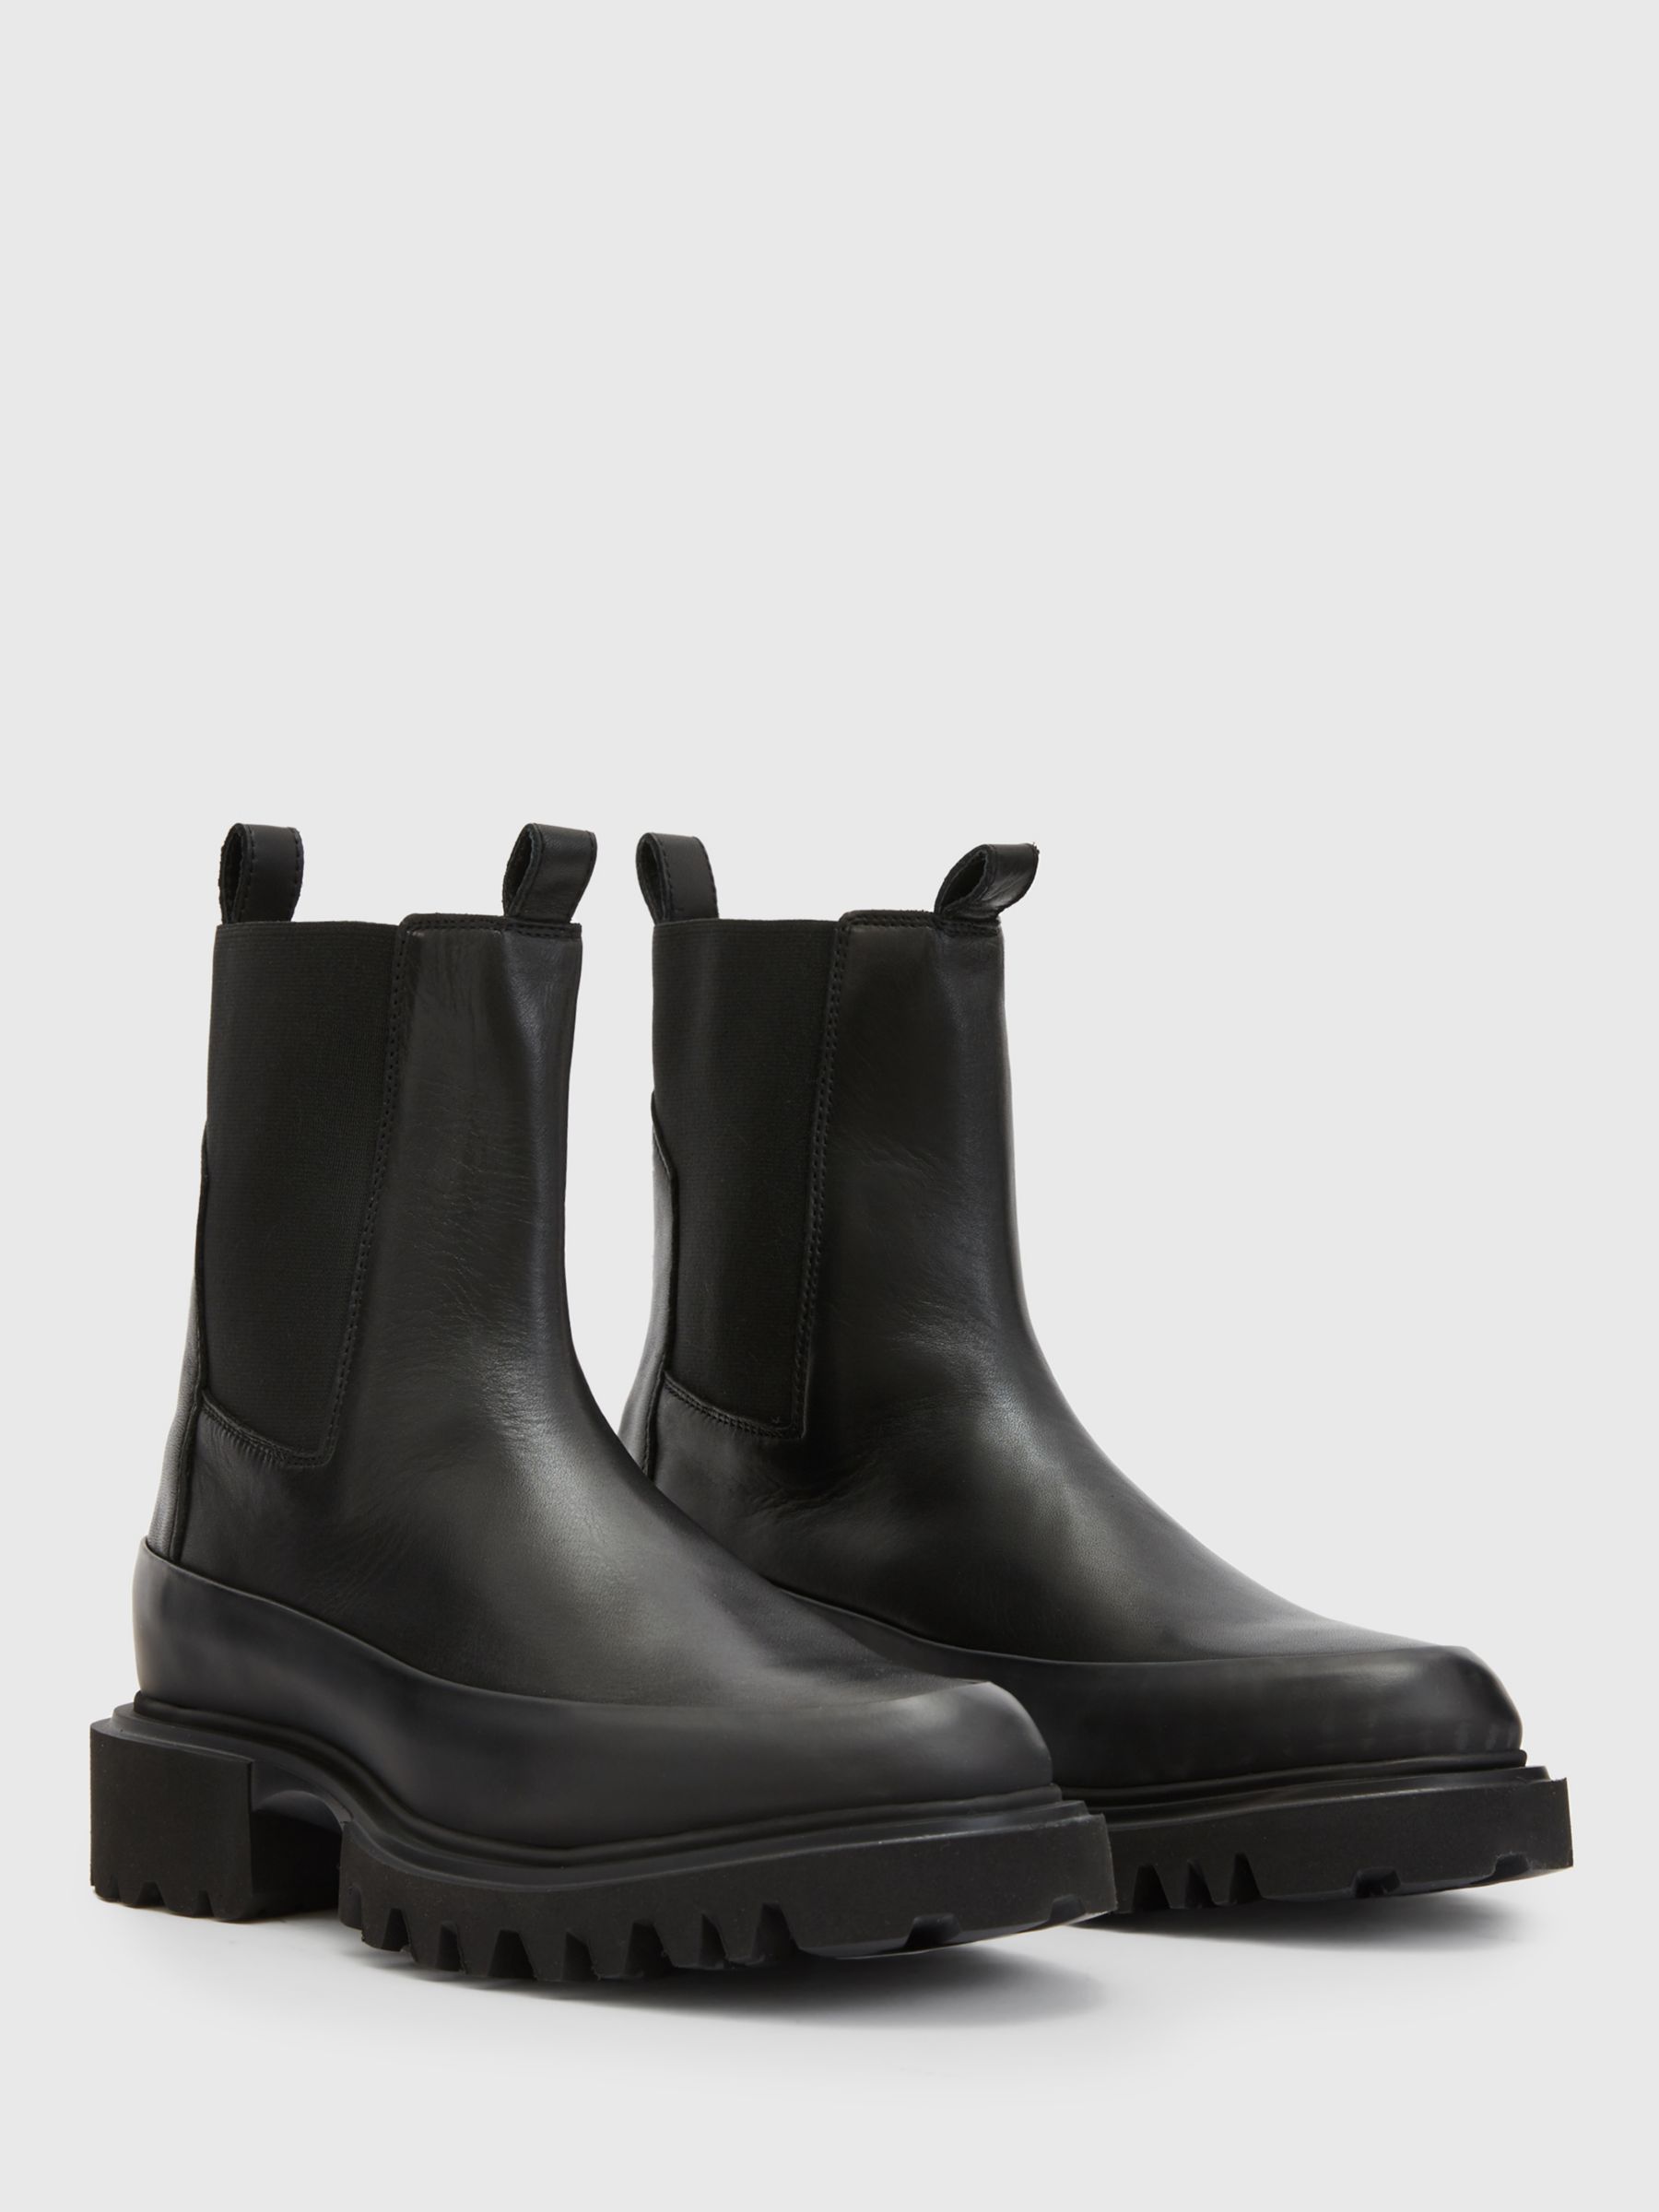 AllSaints Harlee Leather Chelsea Boots, Black, 3